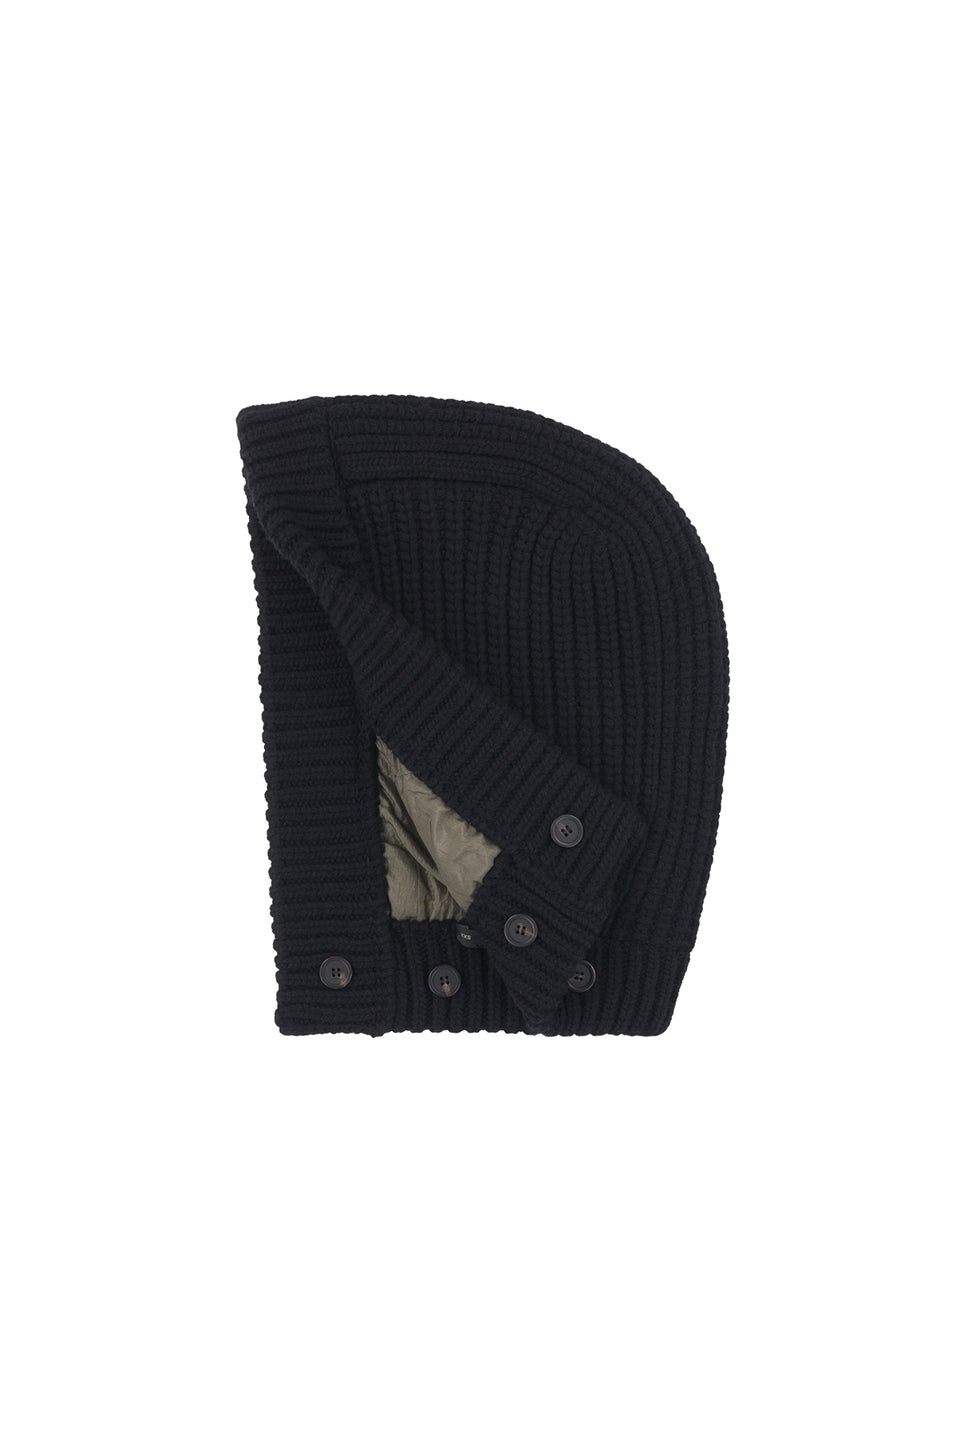 Knit Quilt Hood - Black / Dark Olive (listing page thumbnail)